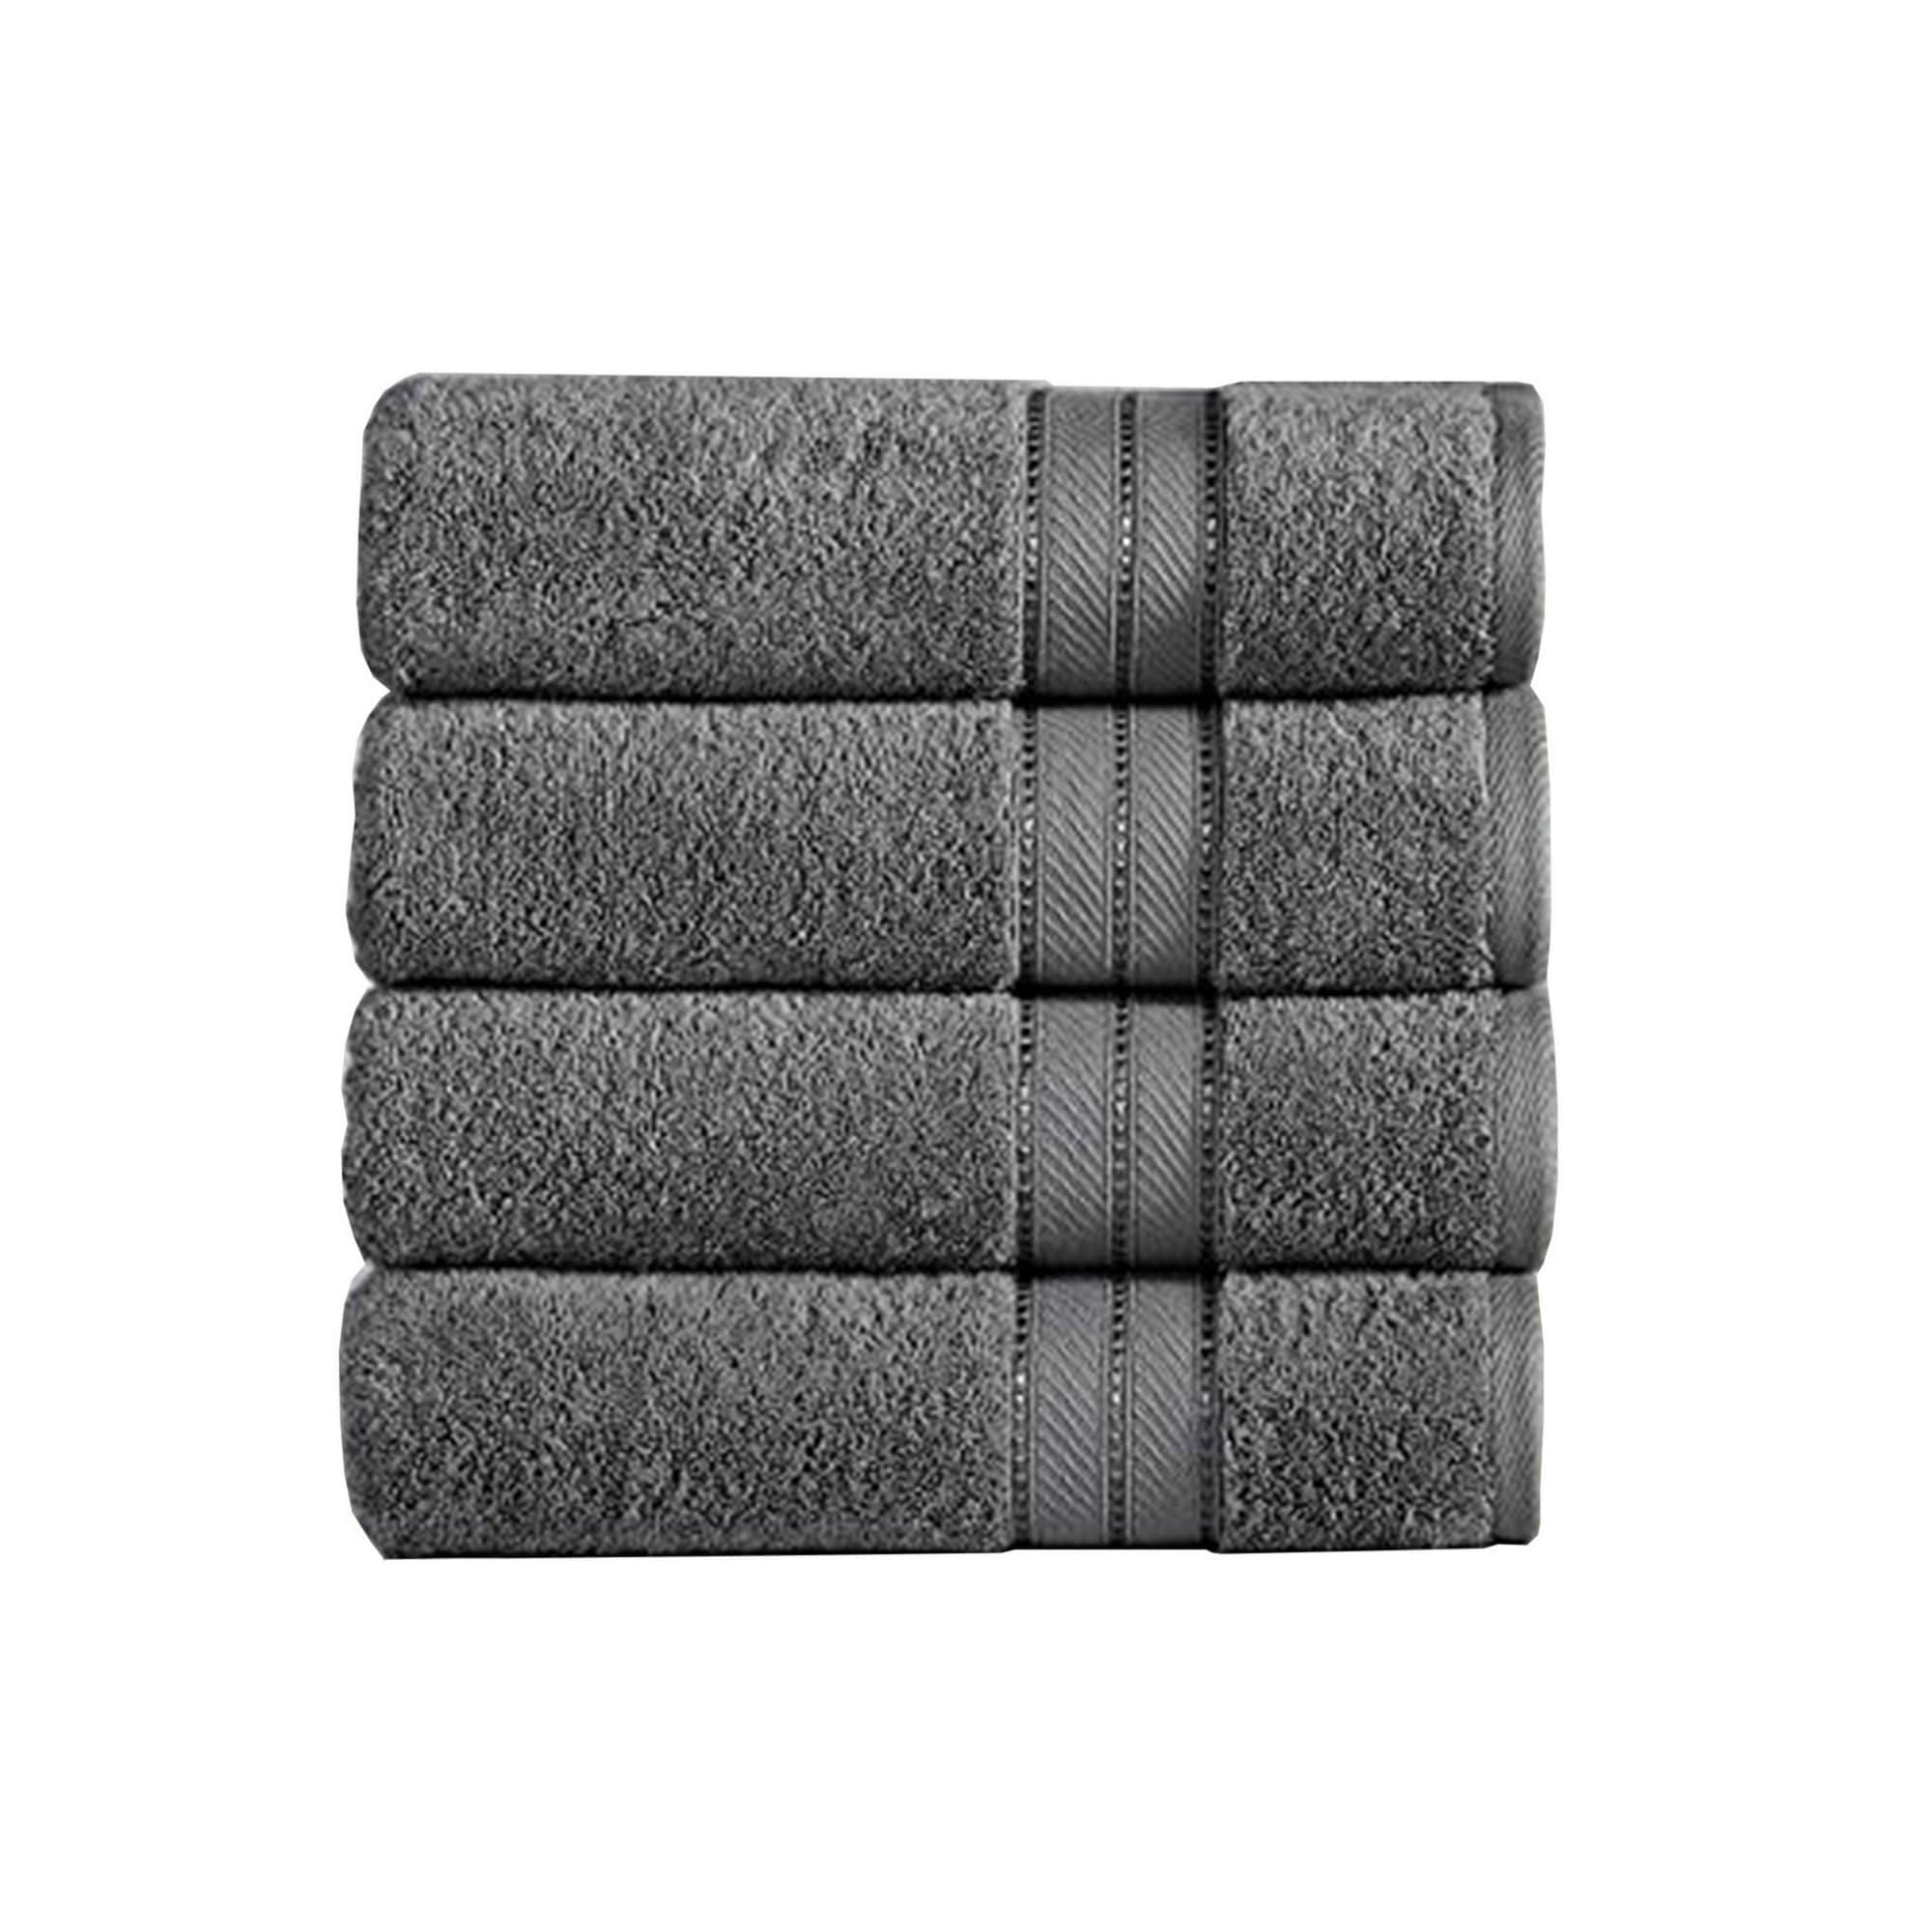 https://ak1.ostkcdn.com/images/products/is/images/direct/ddc1fc77ec08cabe556547fc2003e5c4fdff43ac/Bergamo-4-Piece-Spun-loft-Fabric-Towels-with-Stripe-Pattern-The-Urban-Port%2CDark-Gray.jpg